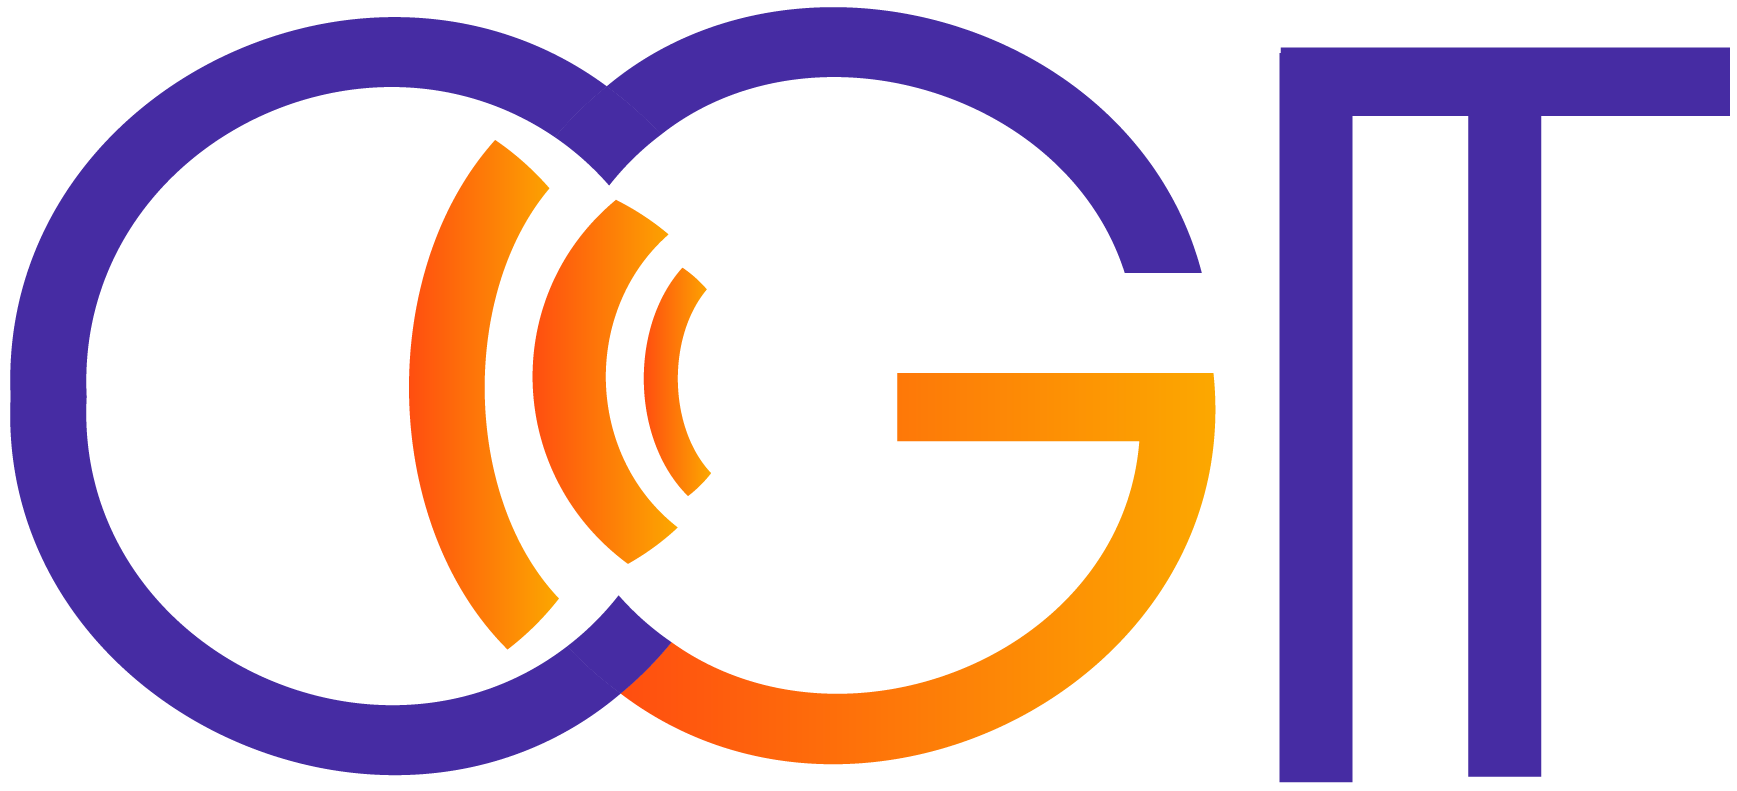 CGIT | Corporate Genesis Information Technology